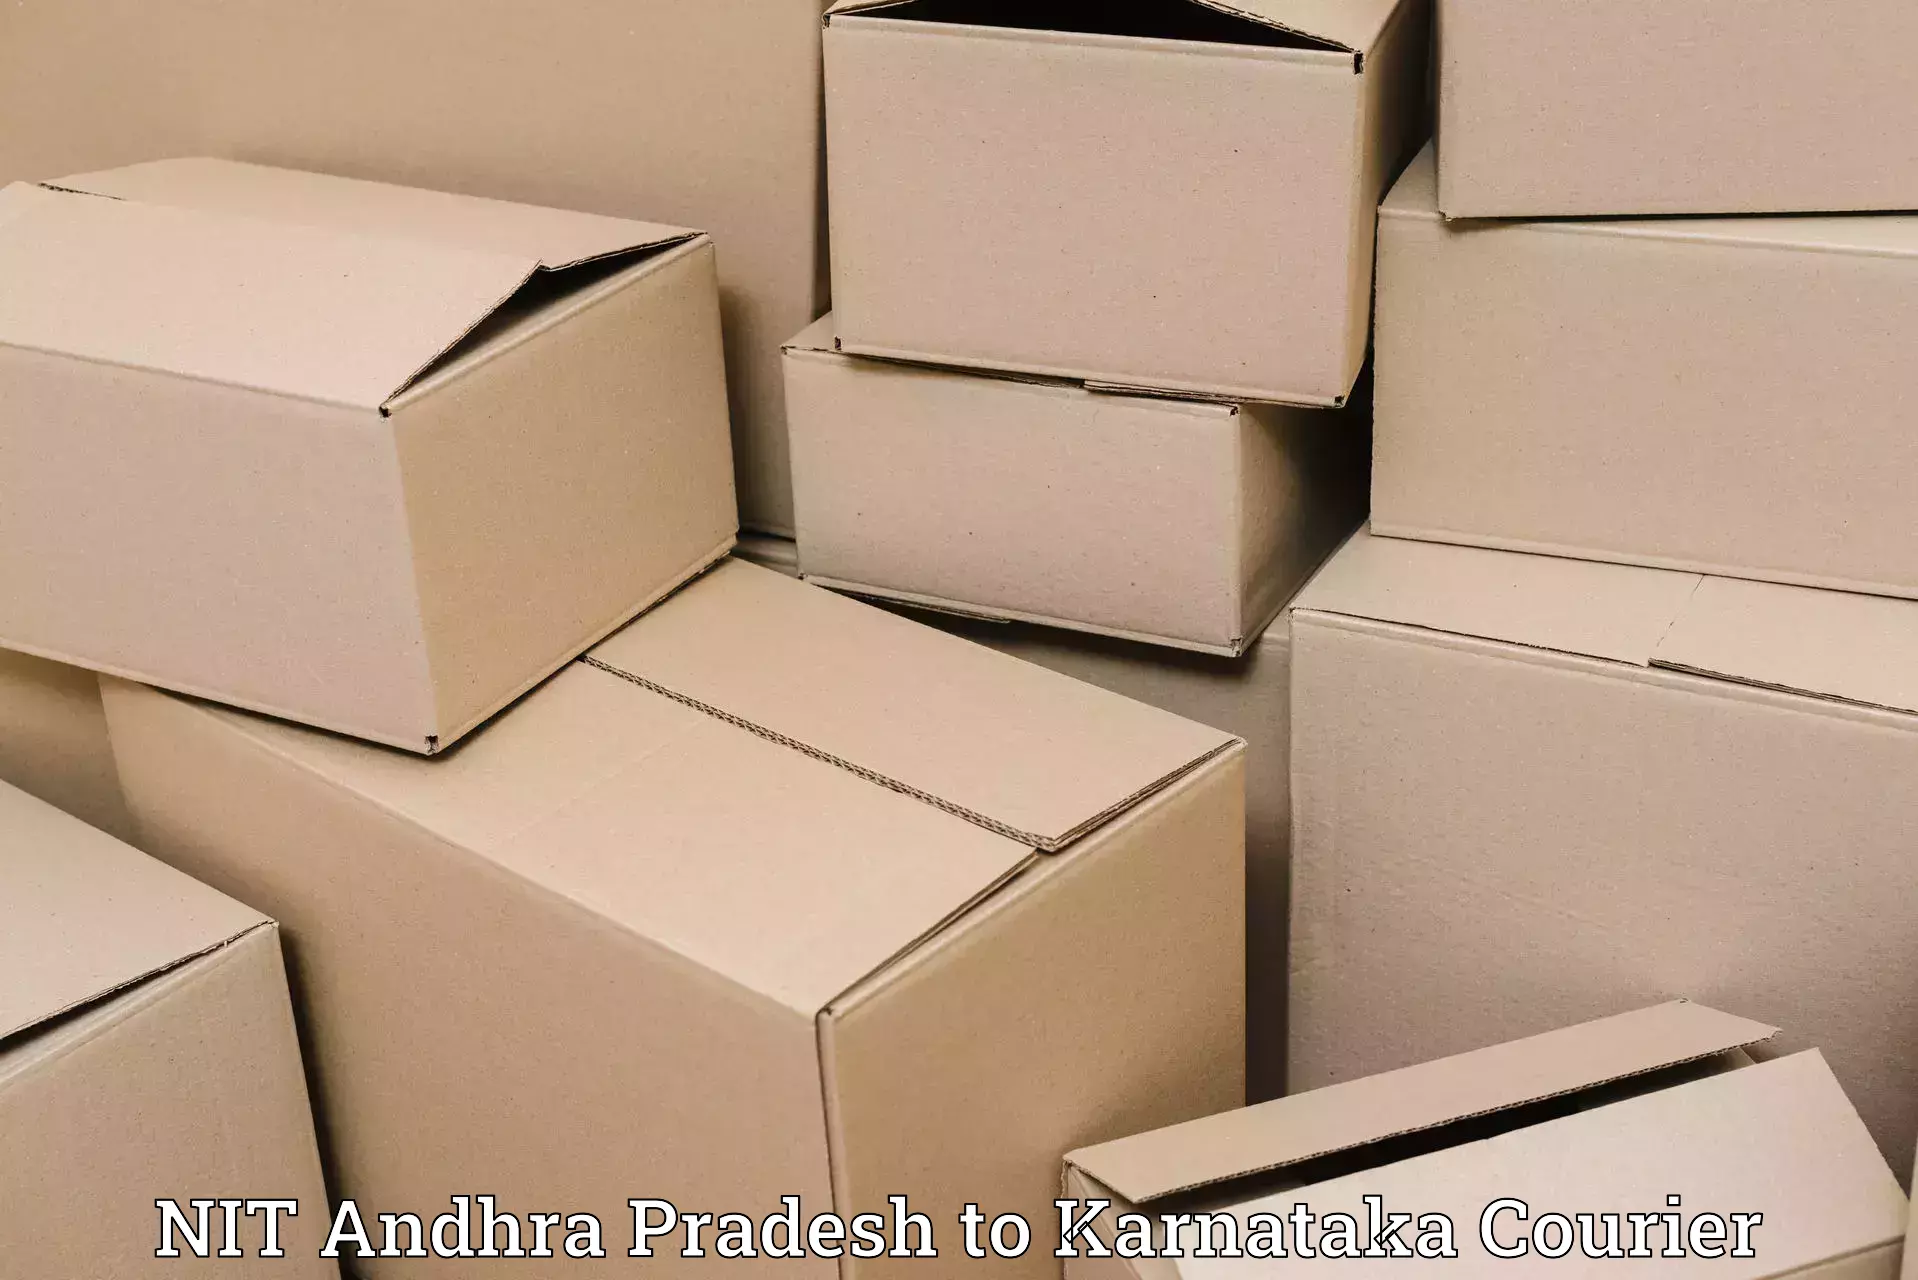 24-hour courier services NIT Andhra Pradesh to Kanjarakatte